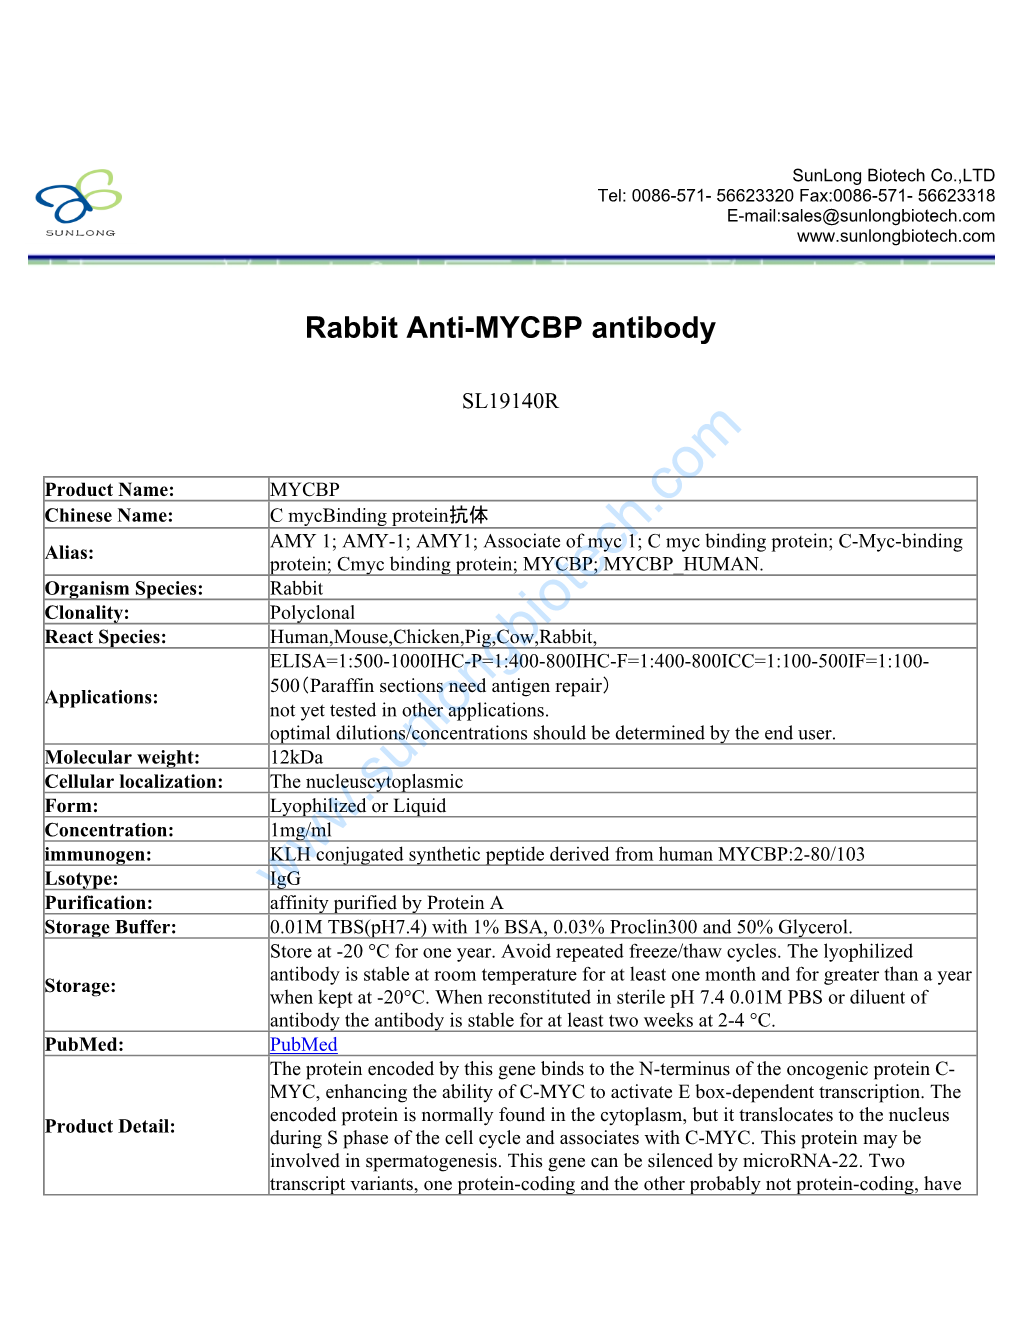 Rabbit Anti-MYCBP Antibody-SL19140R